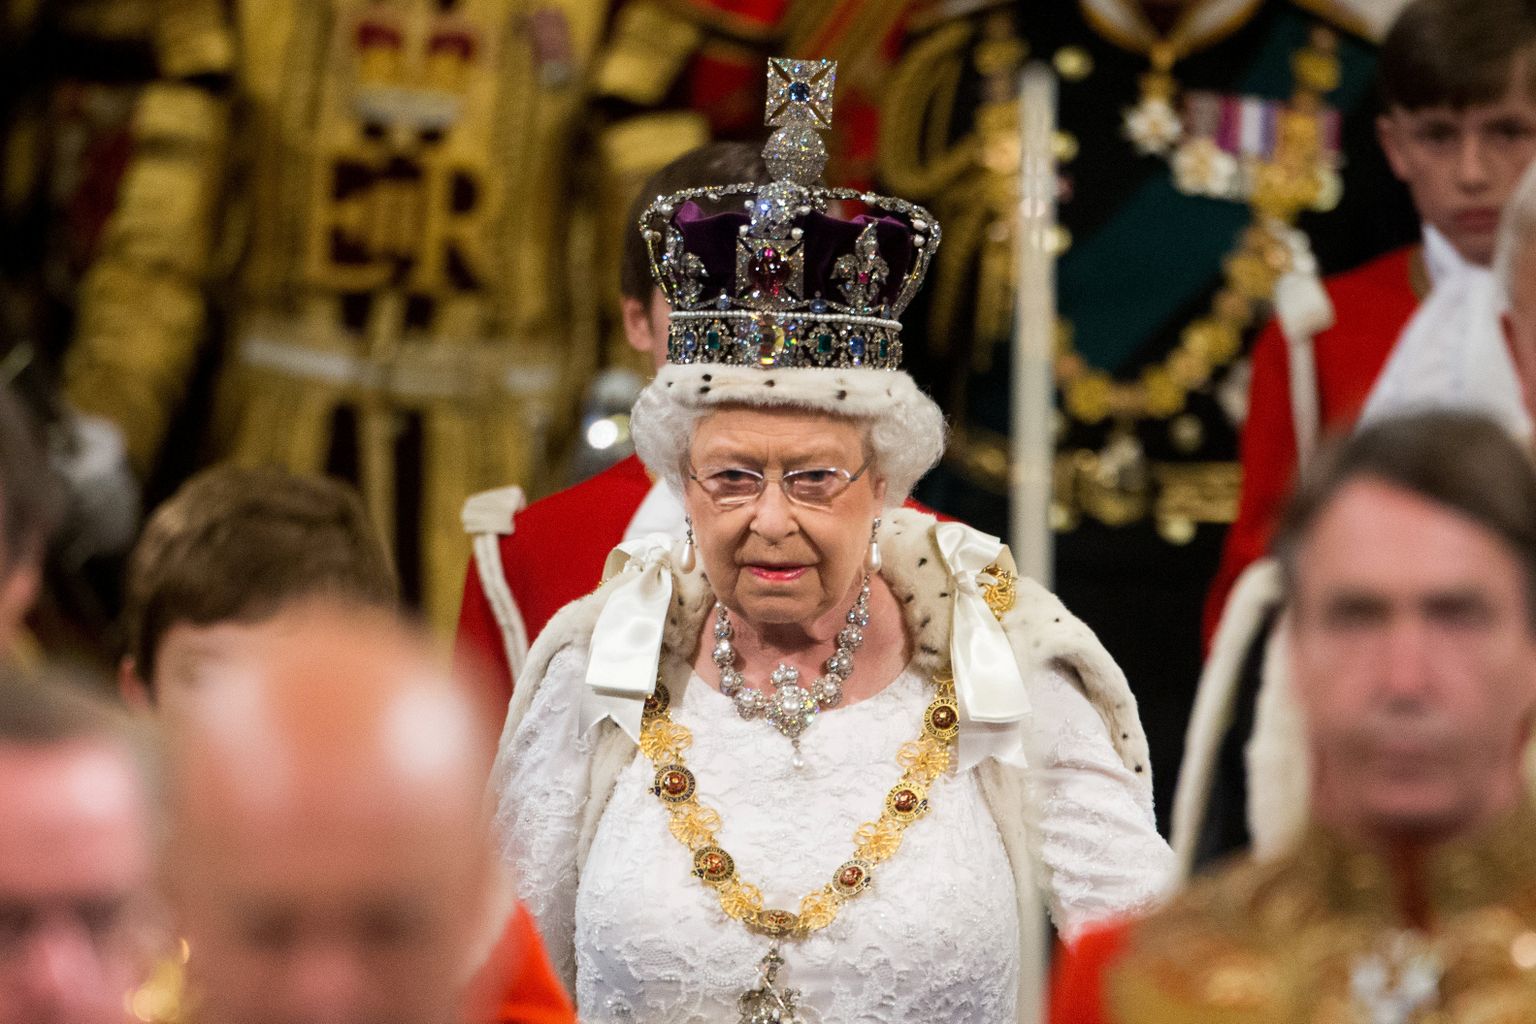 Kuninganna Elizabeth II parlamendi avamise tseremoonial 24. juunil 2020